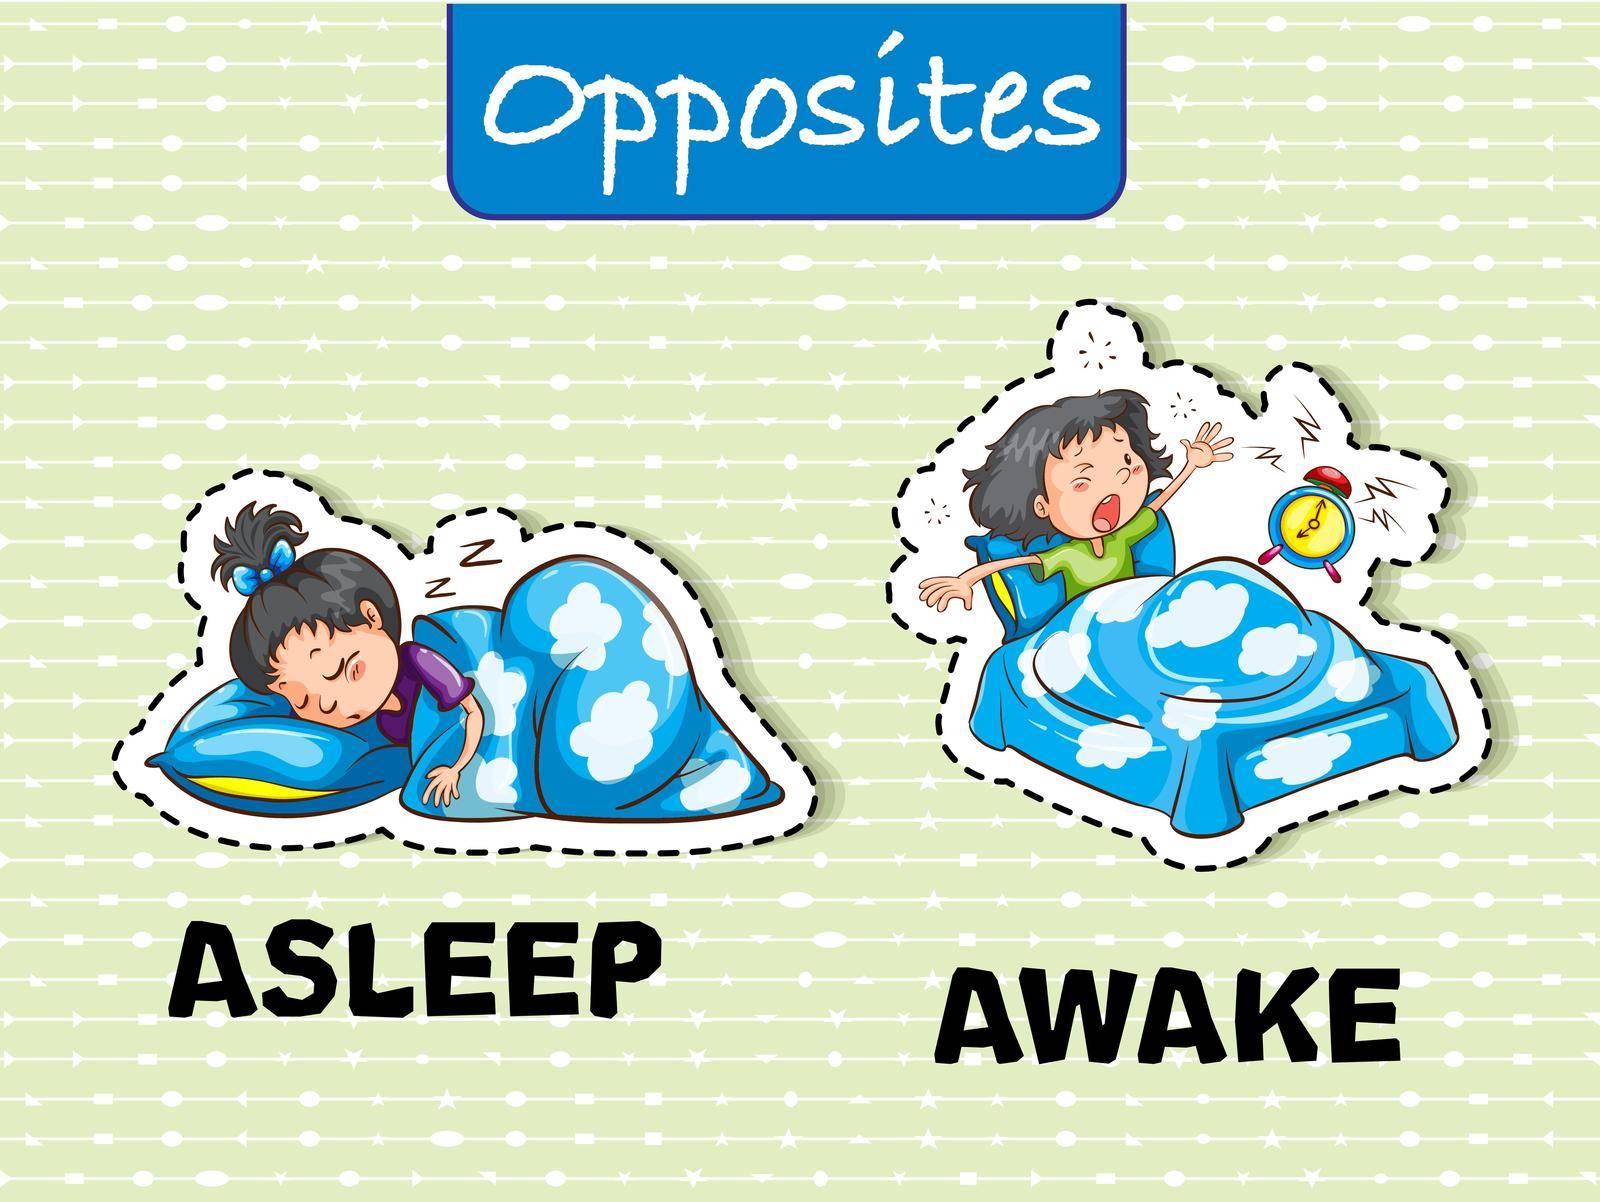 Opposite words for asleep and awake illustration